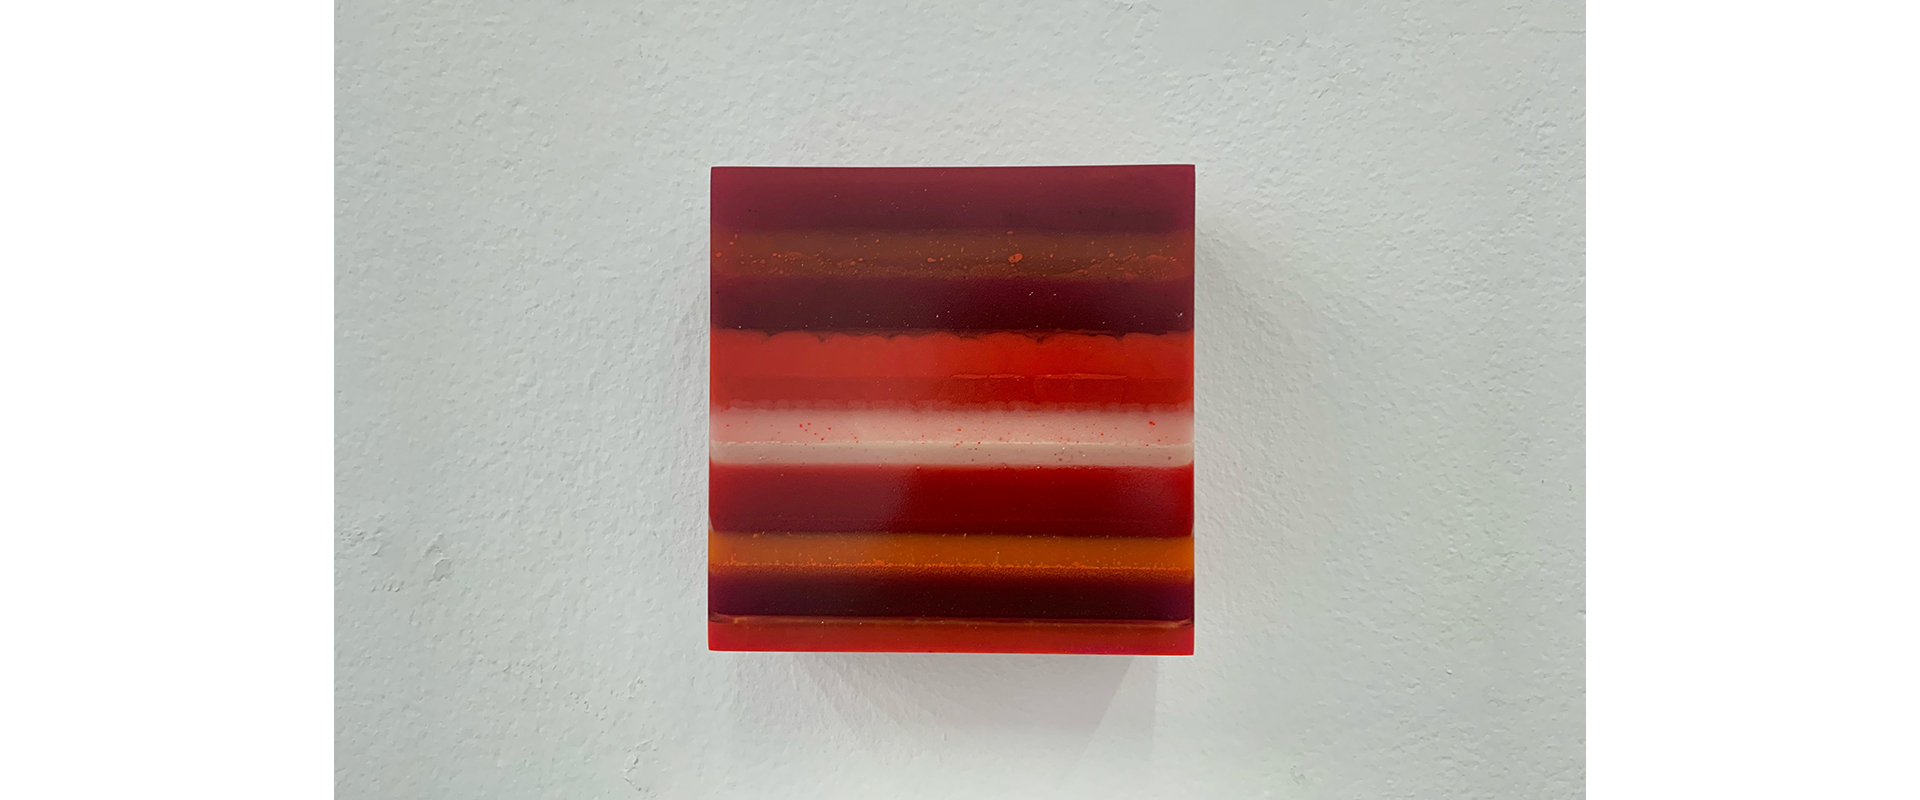 CF 003 - 2021, Harz, Pigmente, 15 x 15 x 5 cm